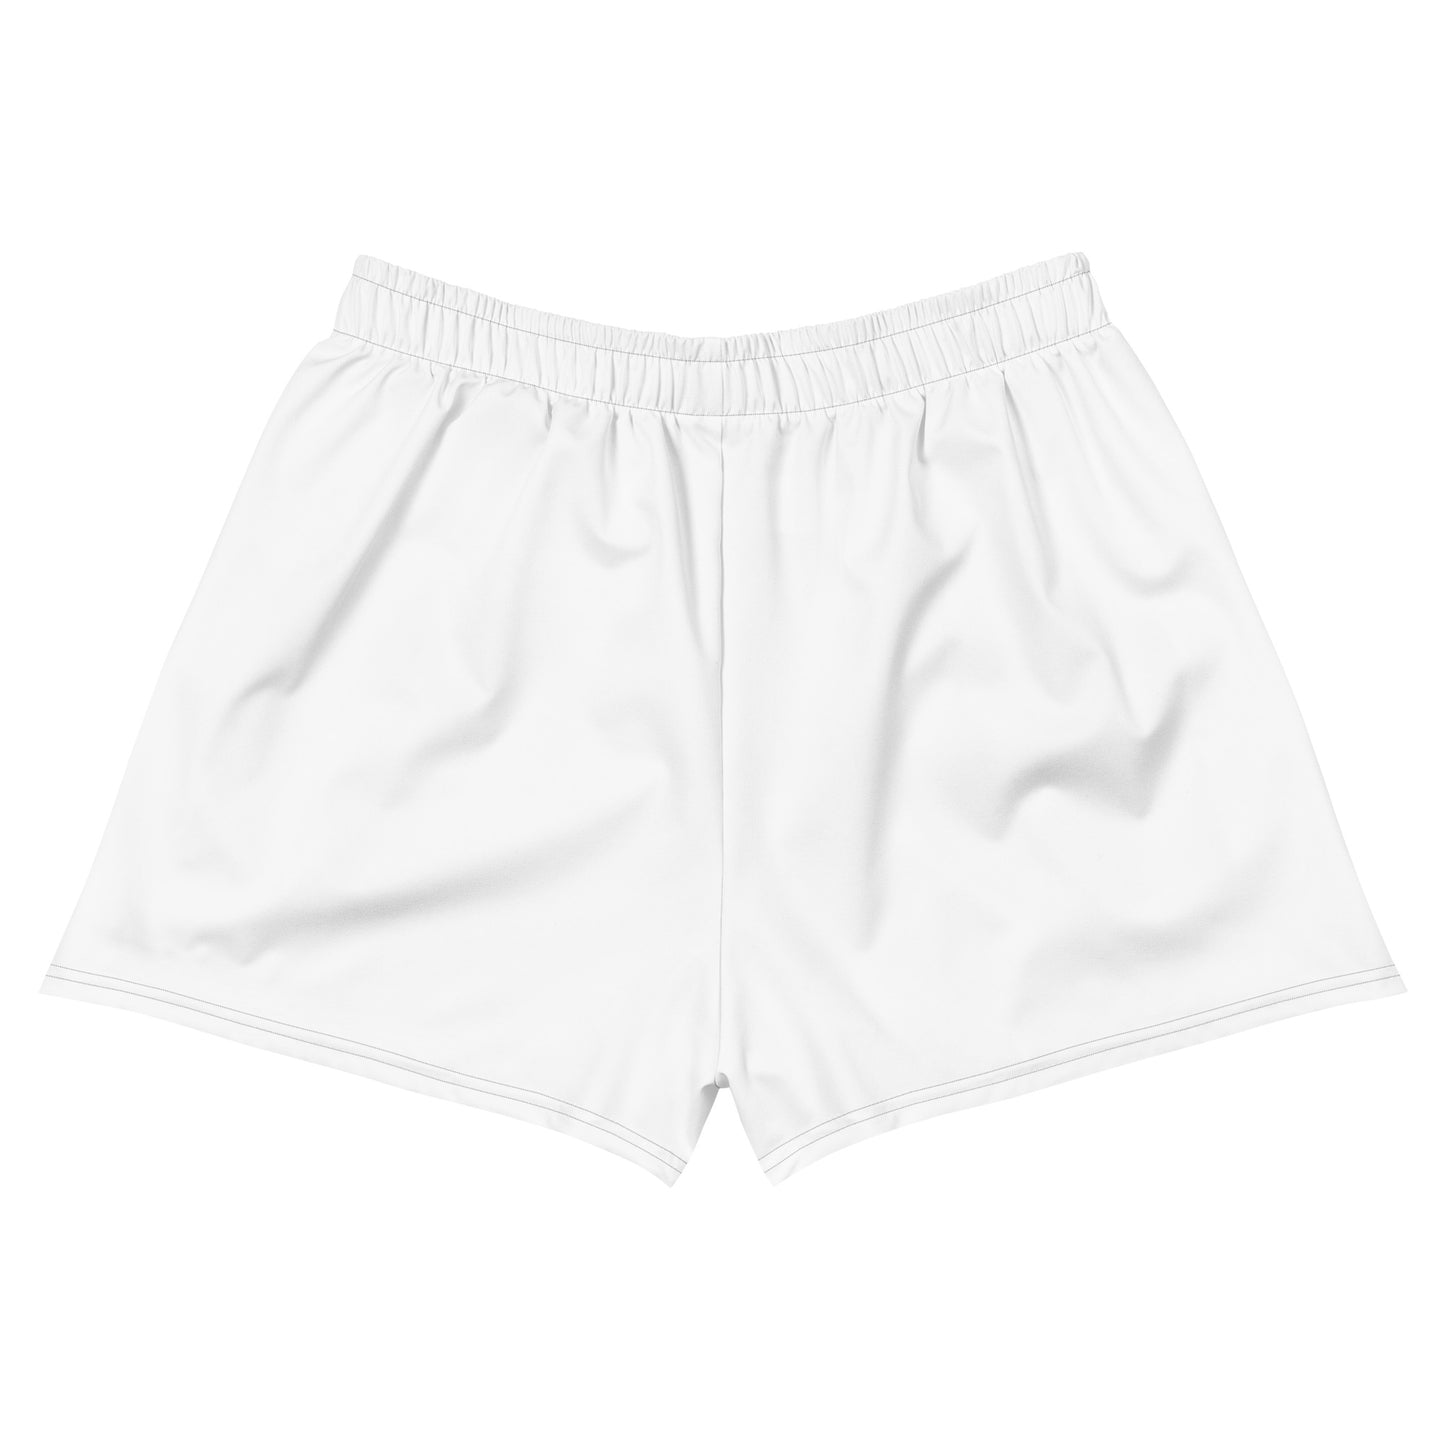 Villa Blvd Université Athletic Shorts - White